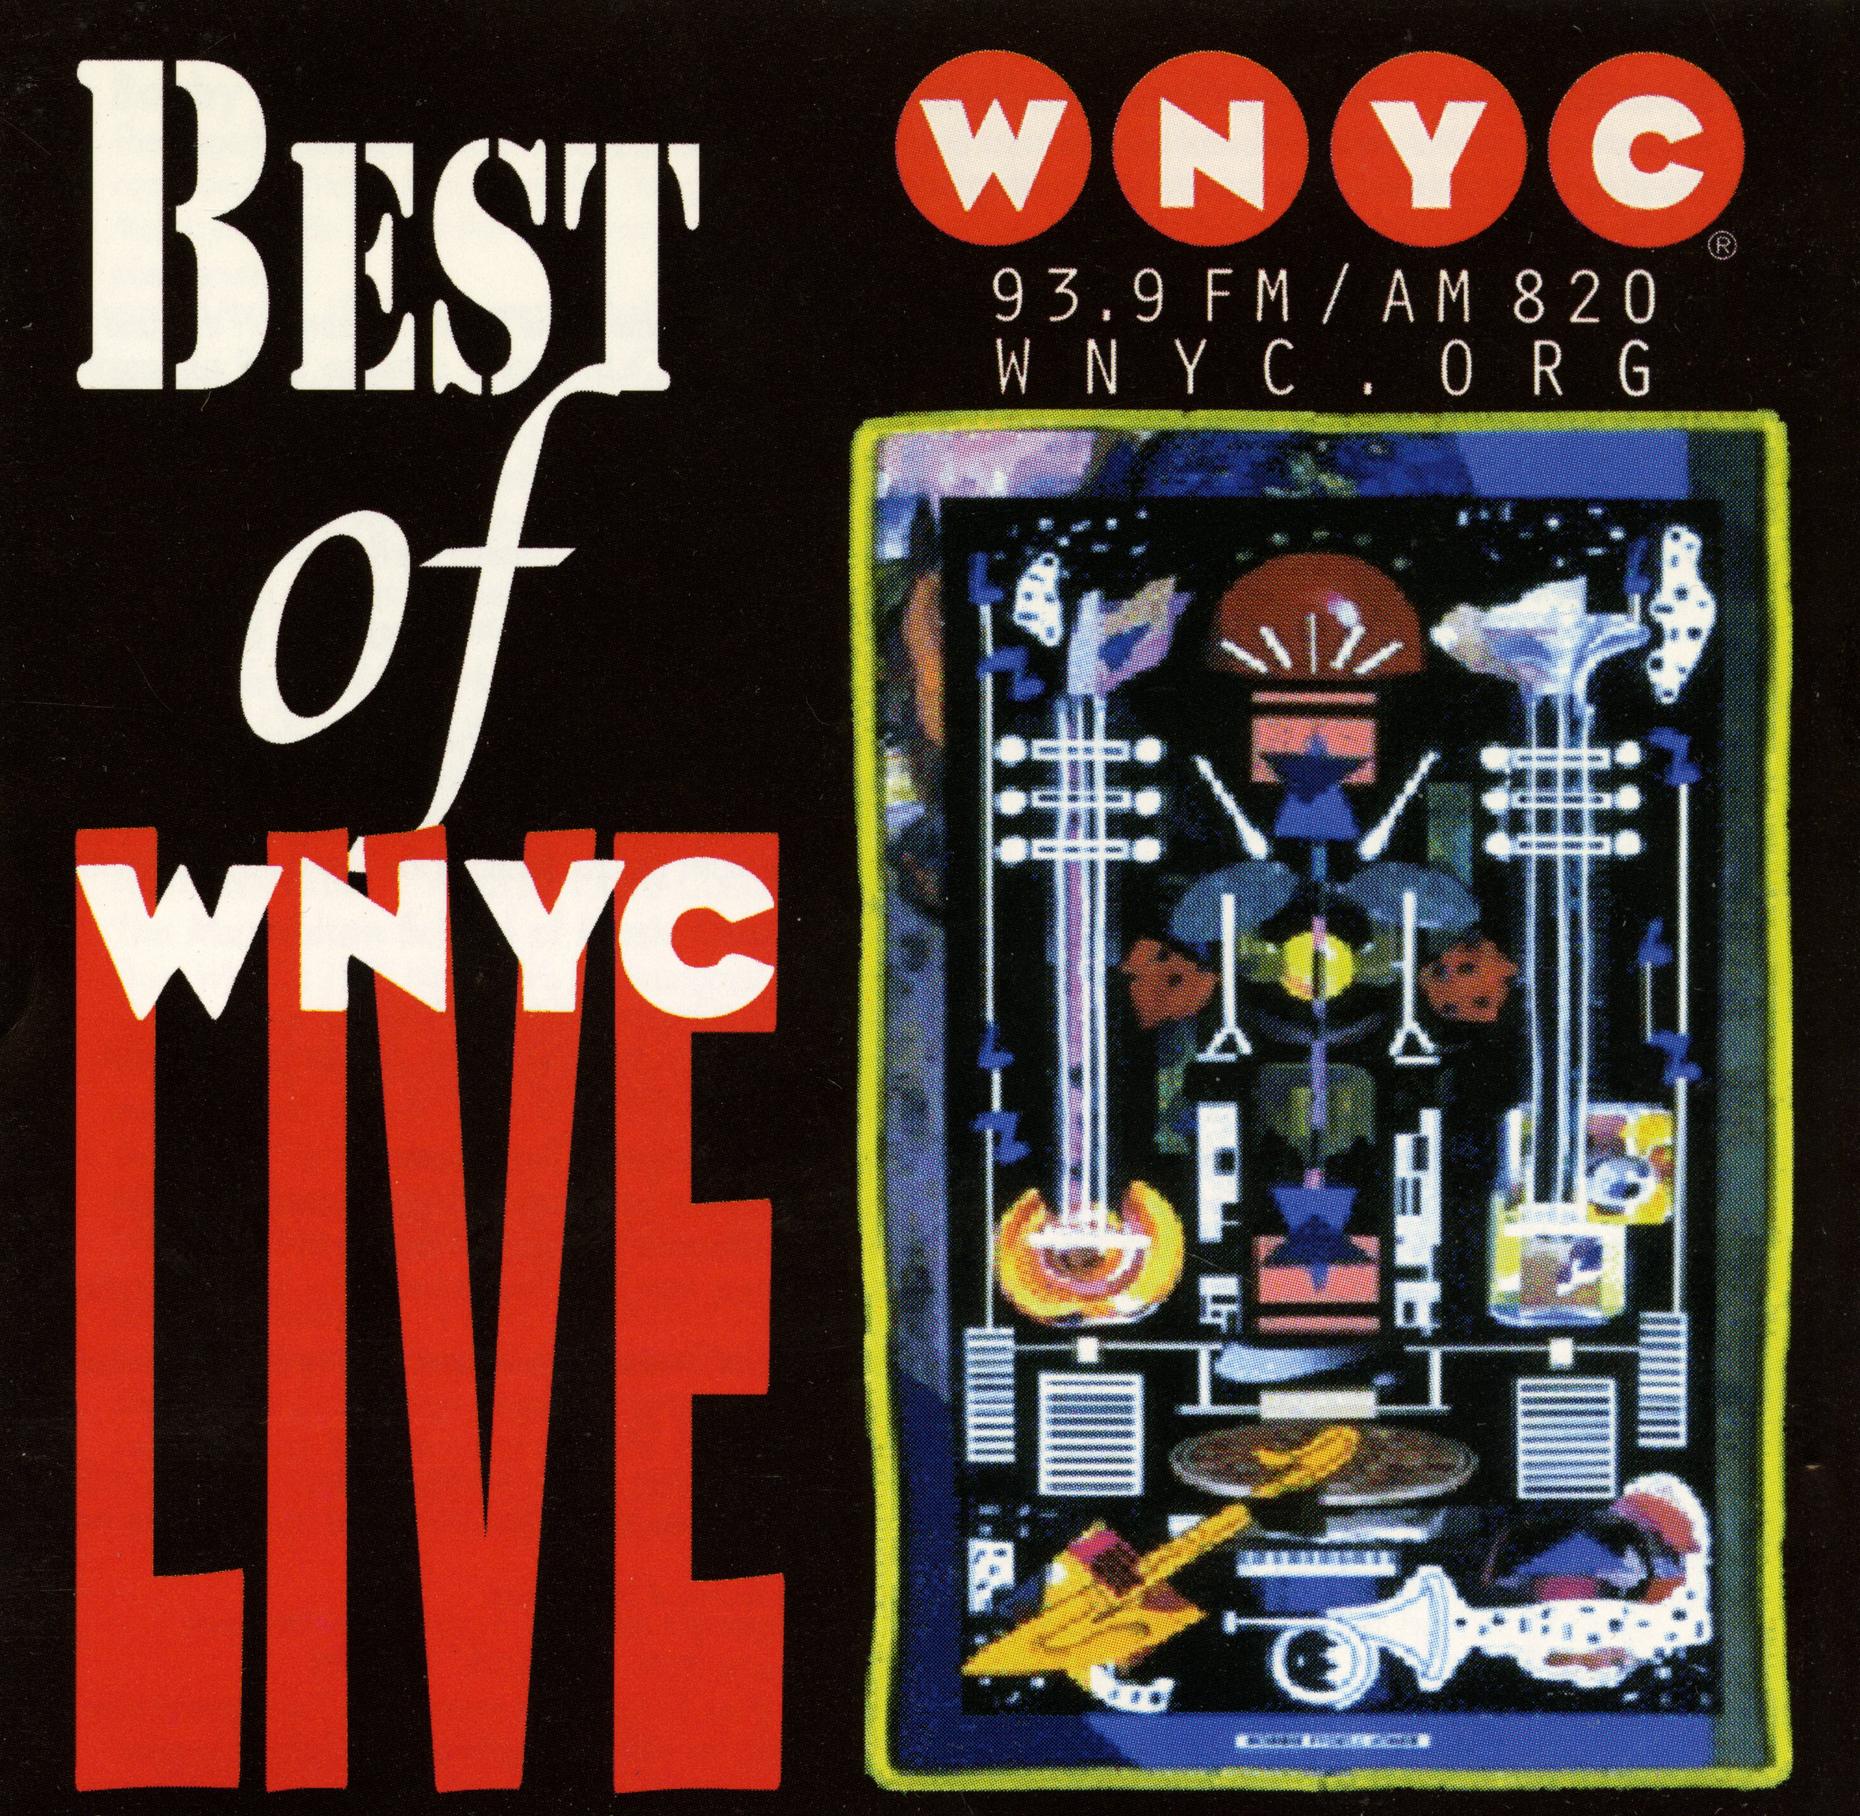 The Best of WNYC Live Volume One WNYC New York Public Radio